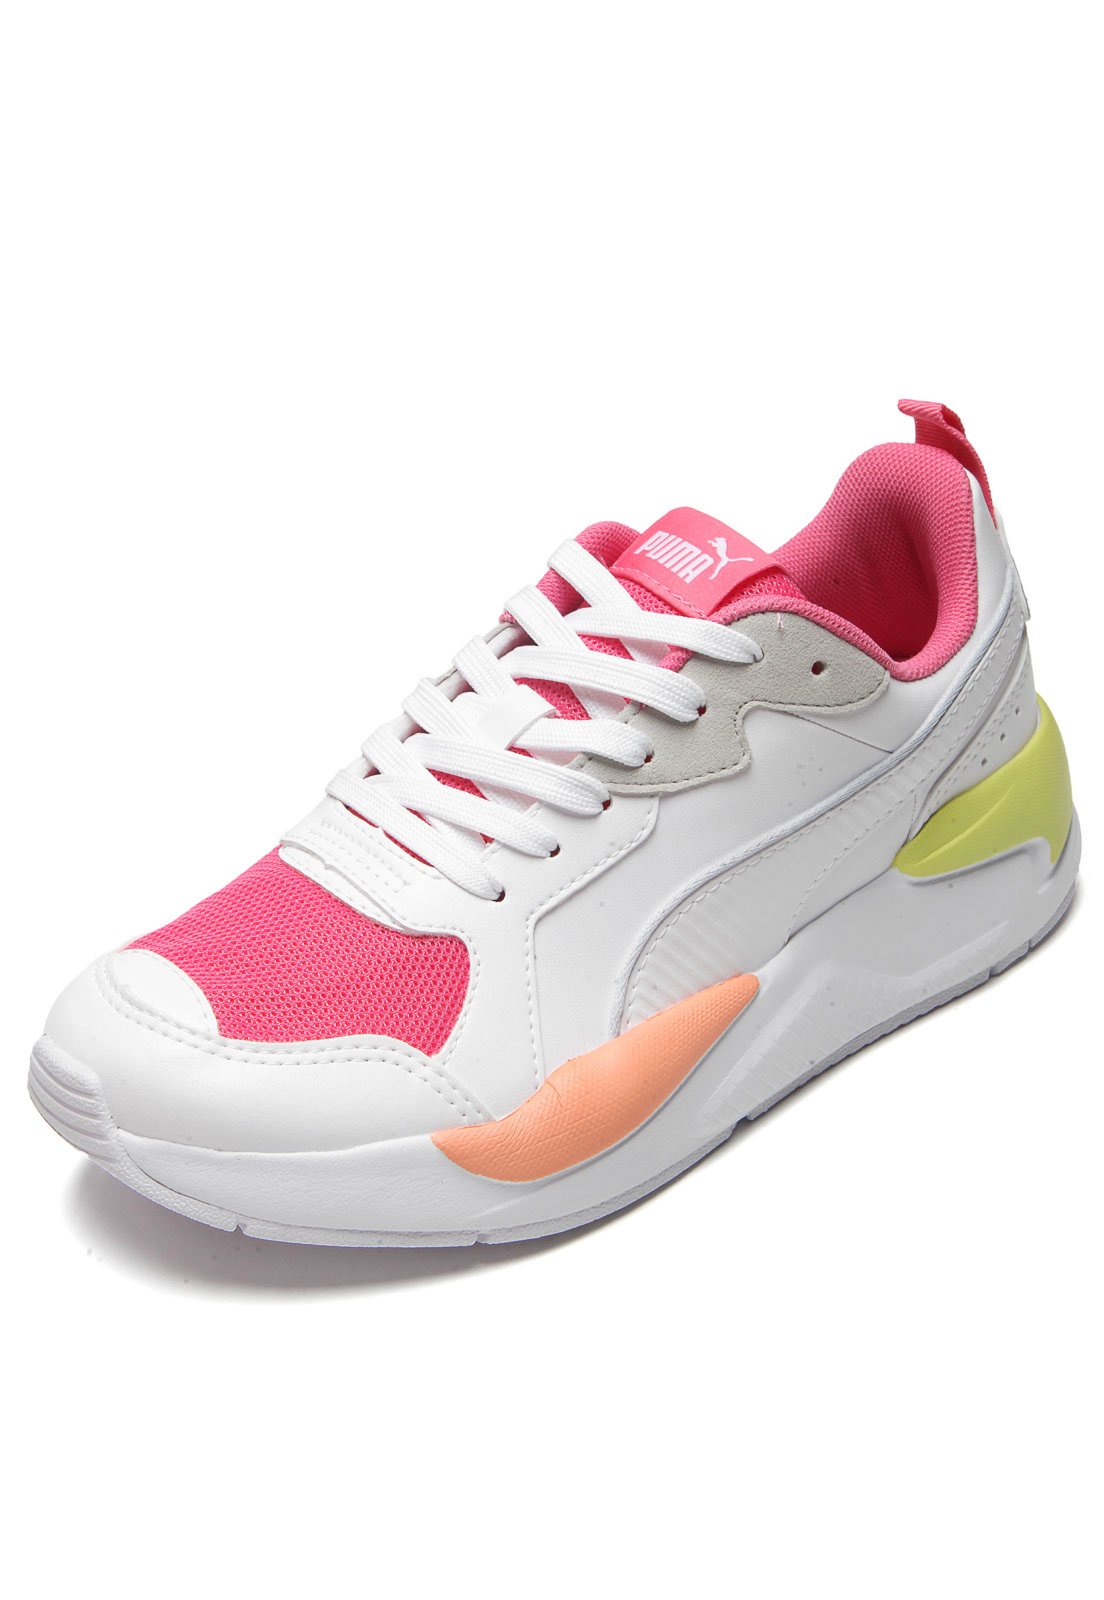 tenis puma feminino rosa e branco